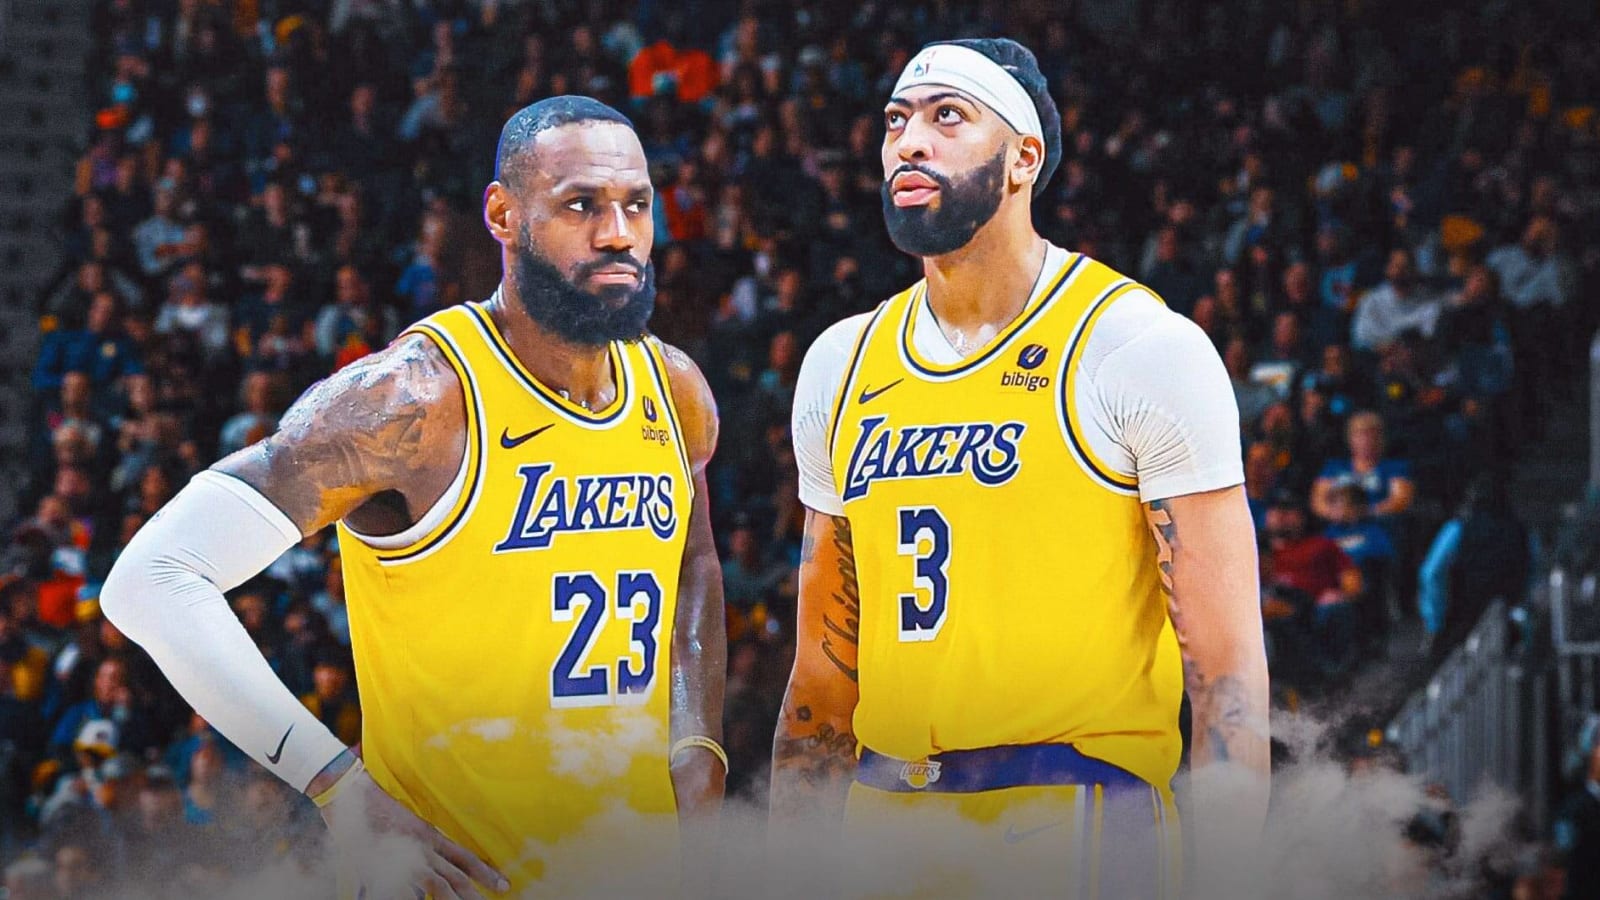  Lakers’ 3 leading head coaching candidates emerge